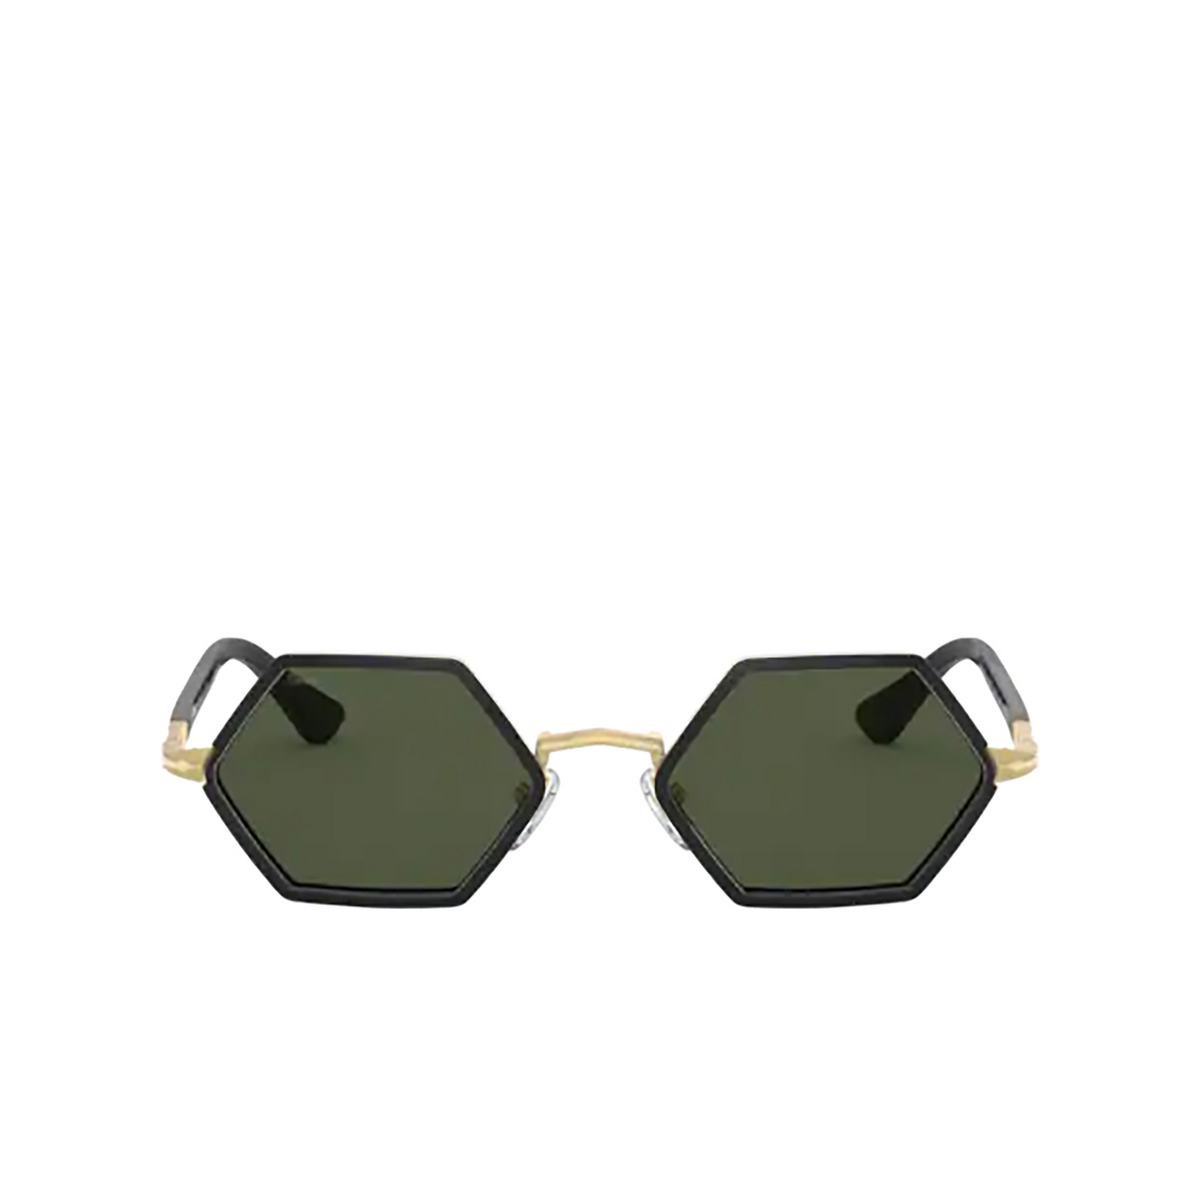 Persol® Irregular Sunglasses: PO2472S color Gold & Black 109731 - front view.